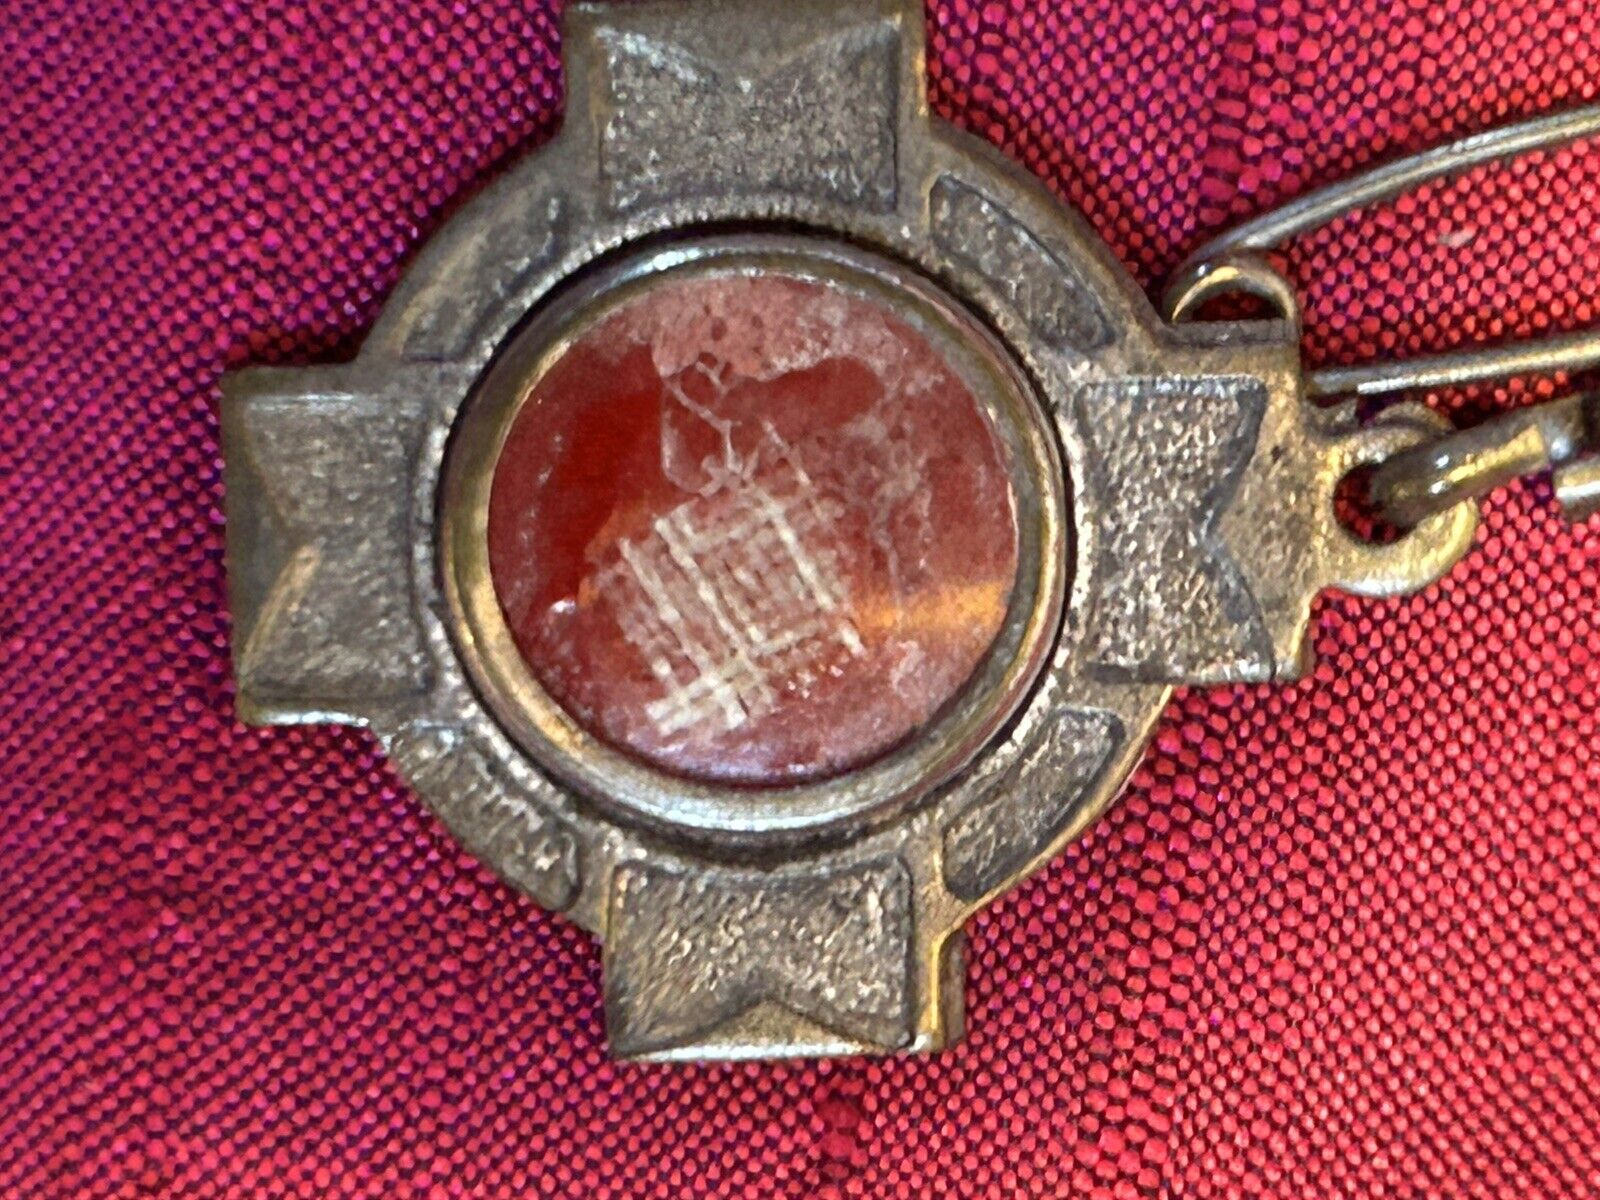 Antique Vintage Religious Reliquaries Grouping 5 Items: 2 Reliquaries Gold Cross